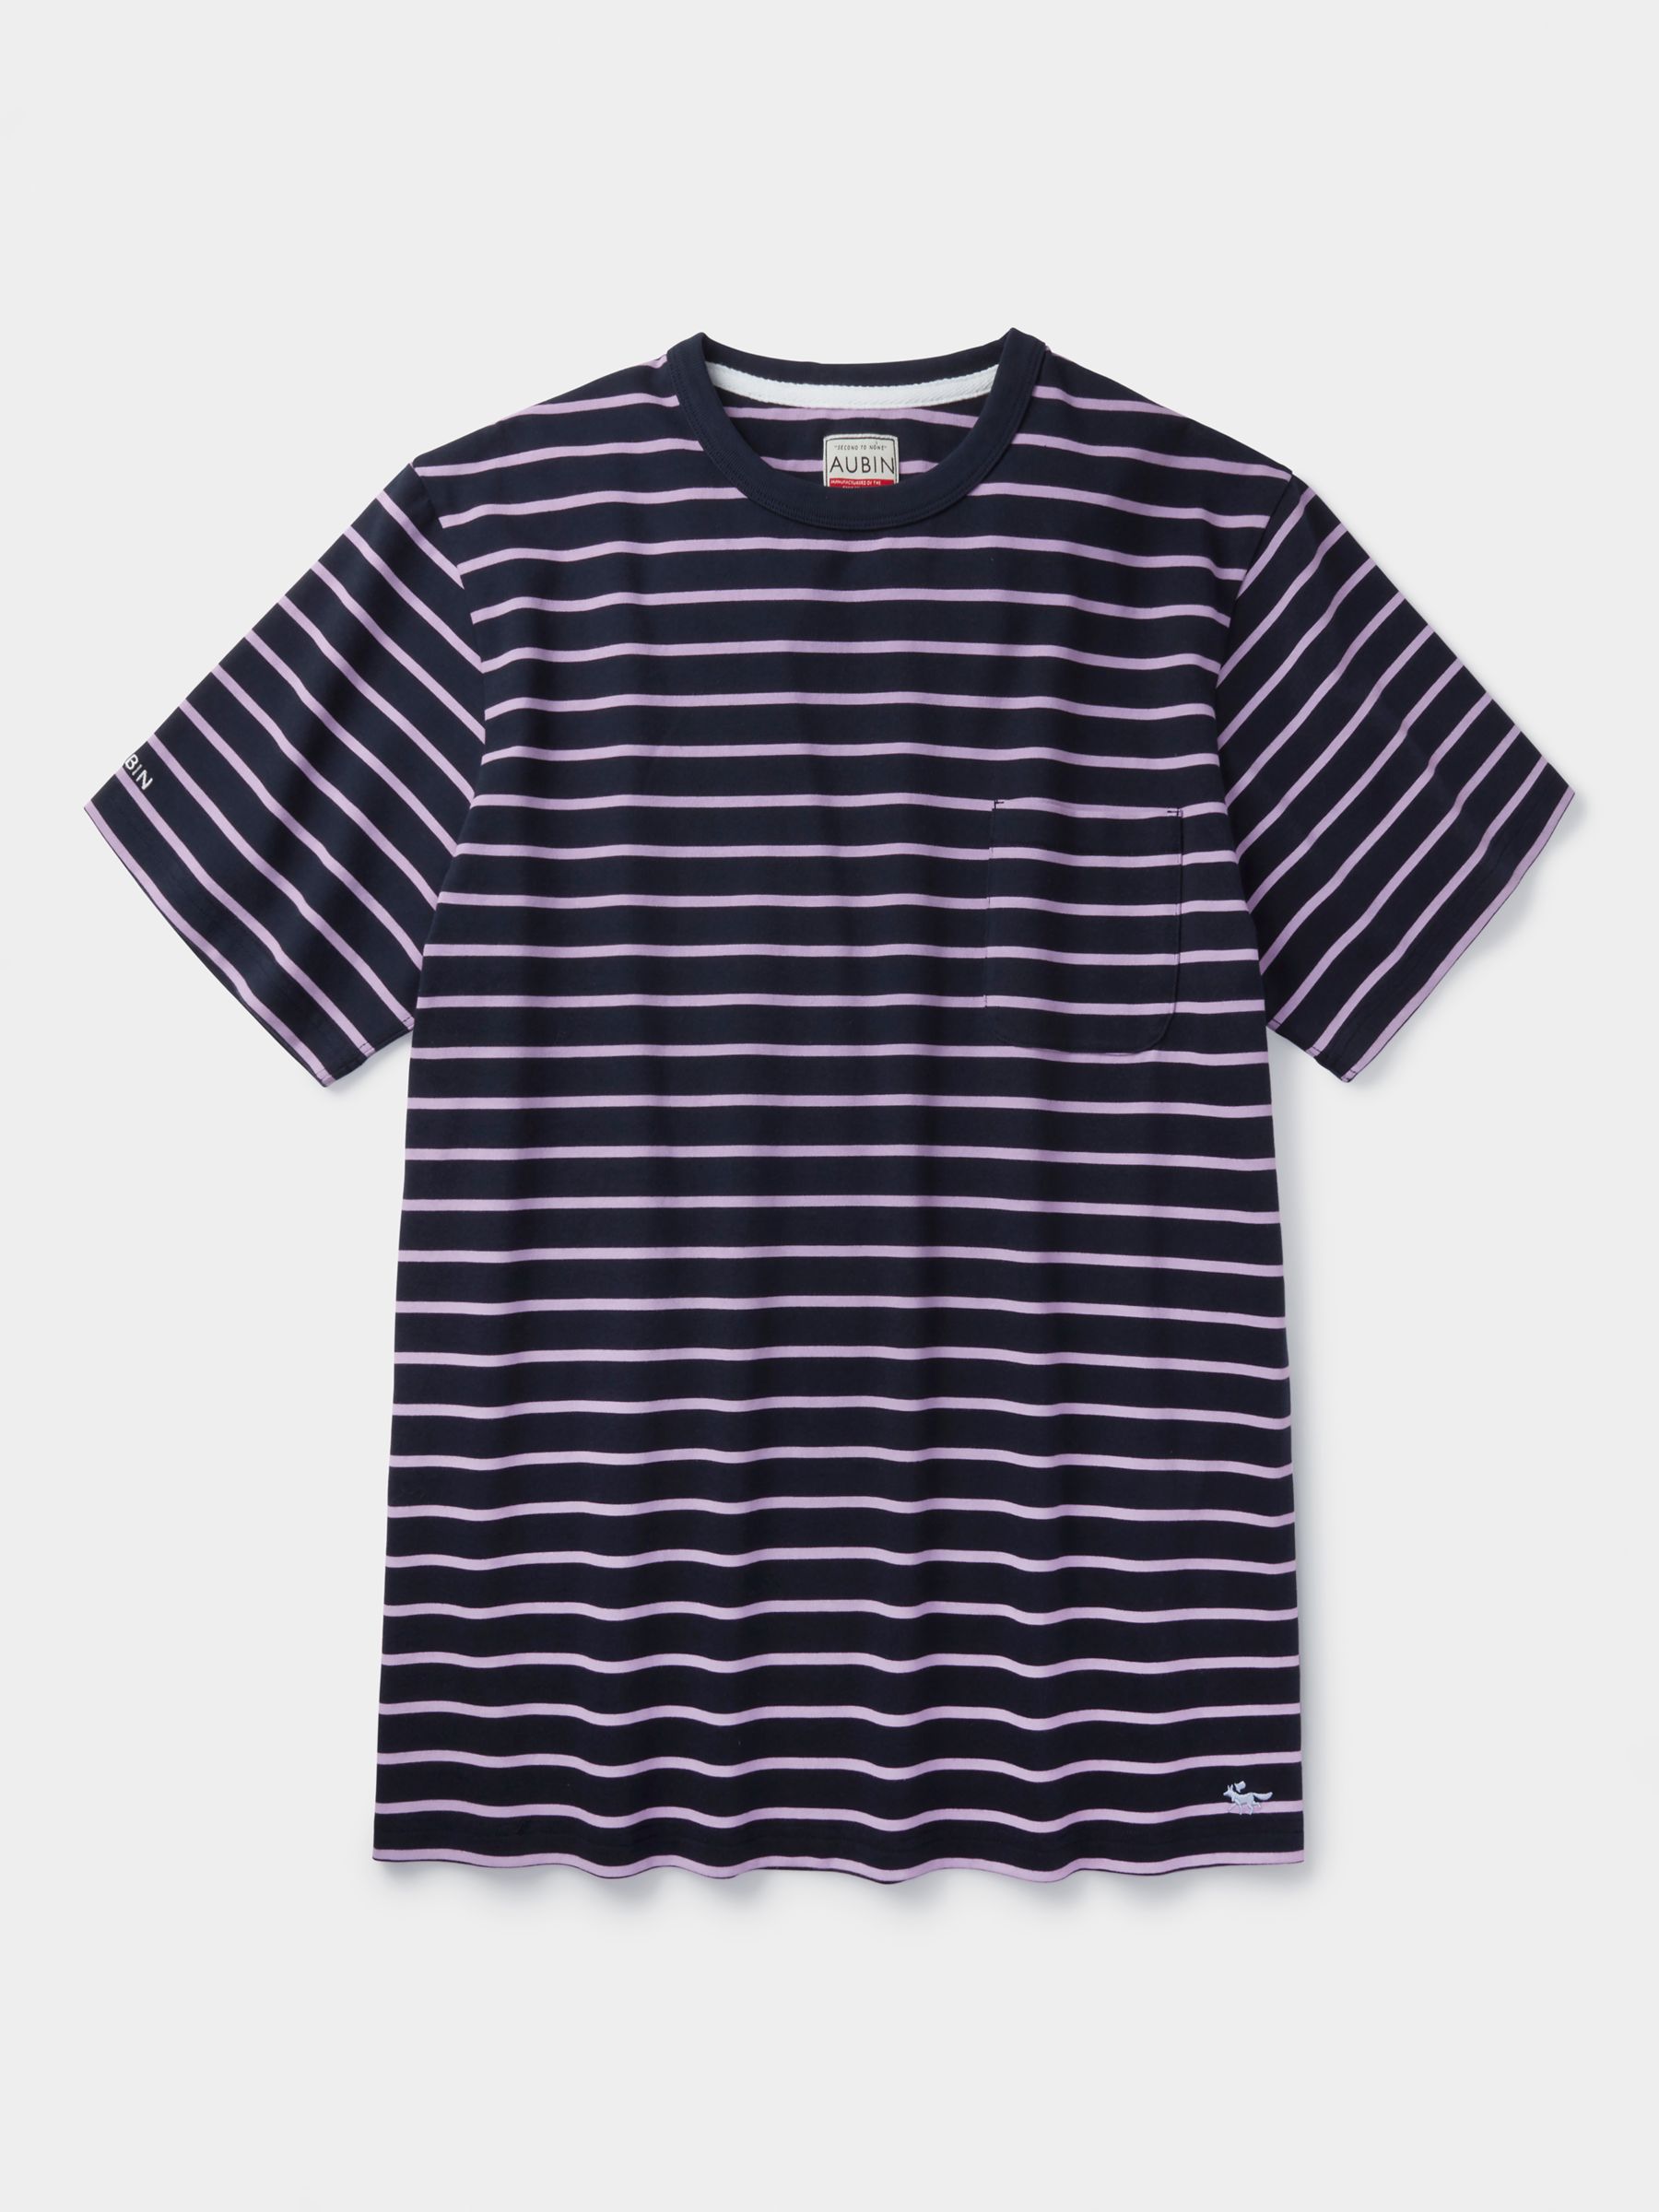 Aubin Santon Relaxed Cotton T-Shirt, Lilac Stripe, S